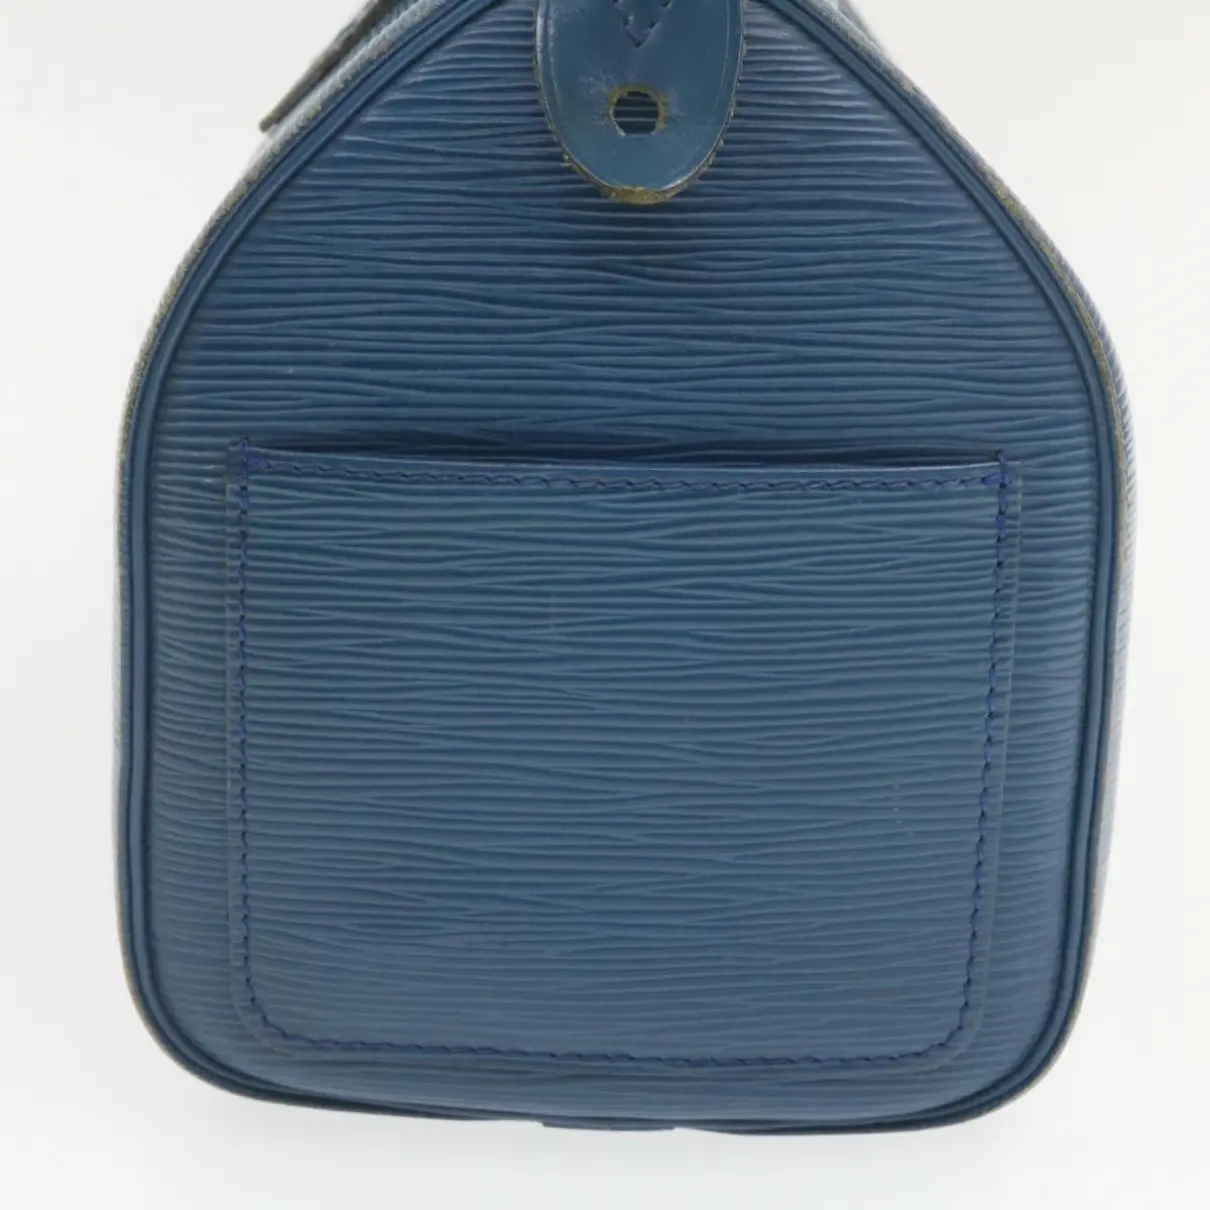 Speedy Doctor 25 leather handbag Louis Vuitton